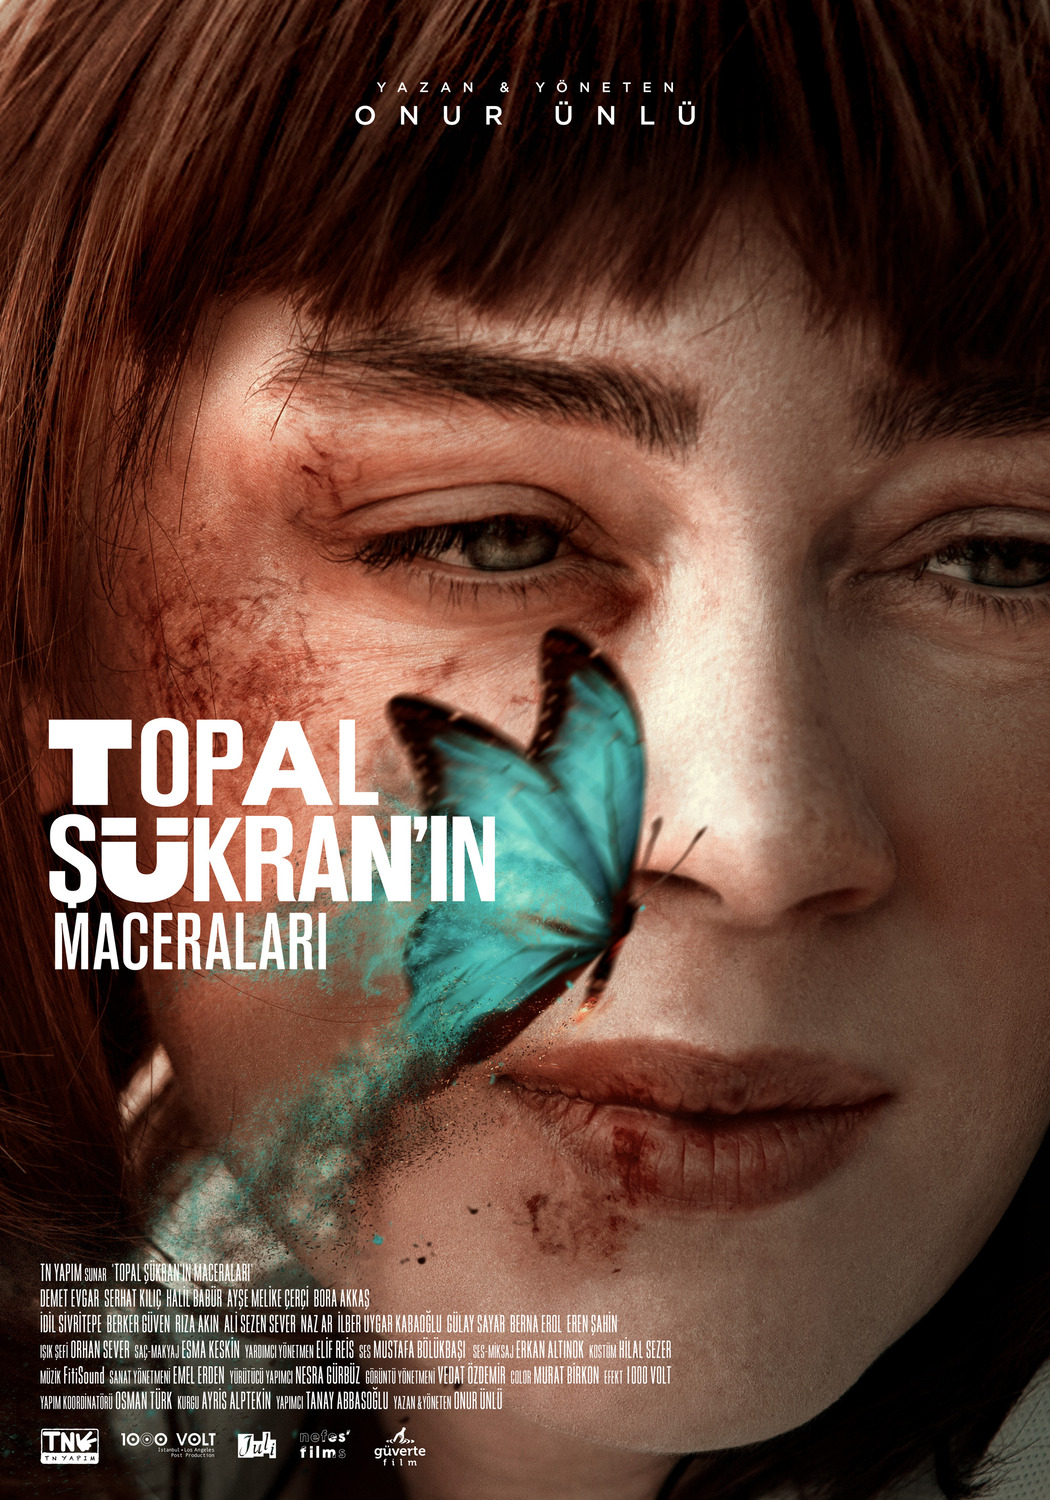 Extra Large Movie Poster Image for Topal Sükran'in Maceralari 